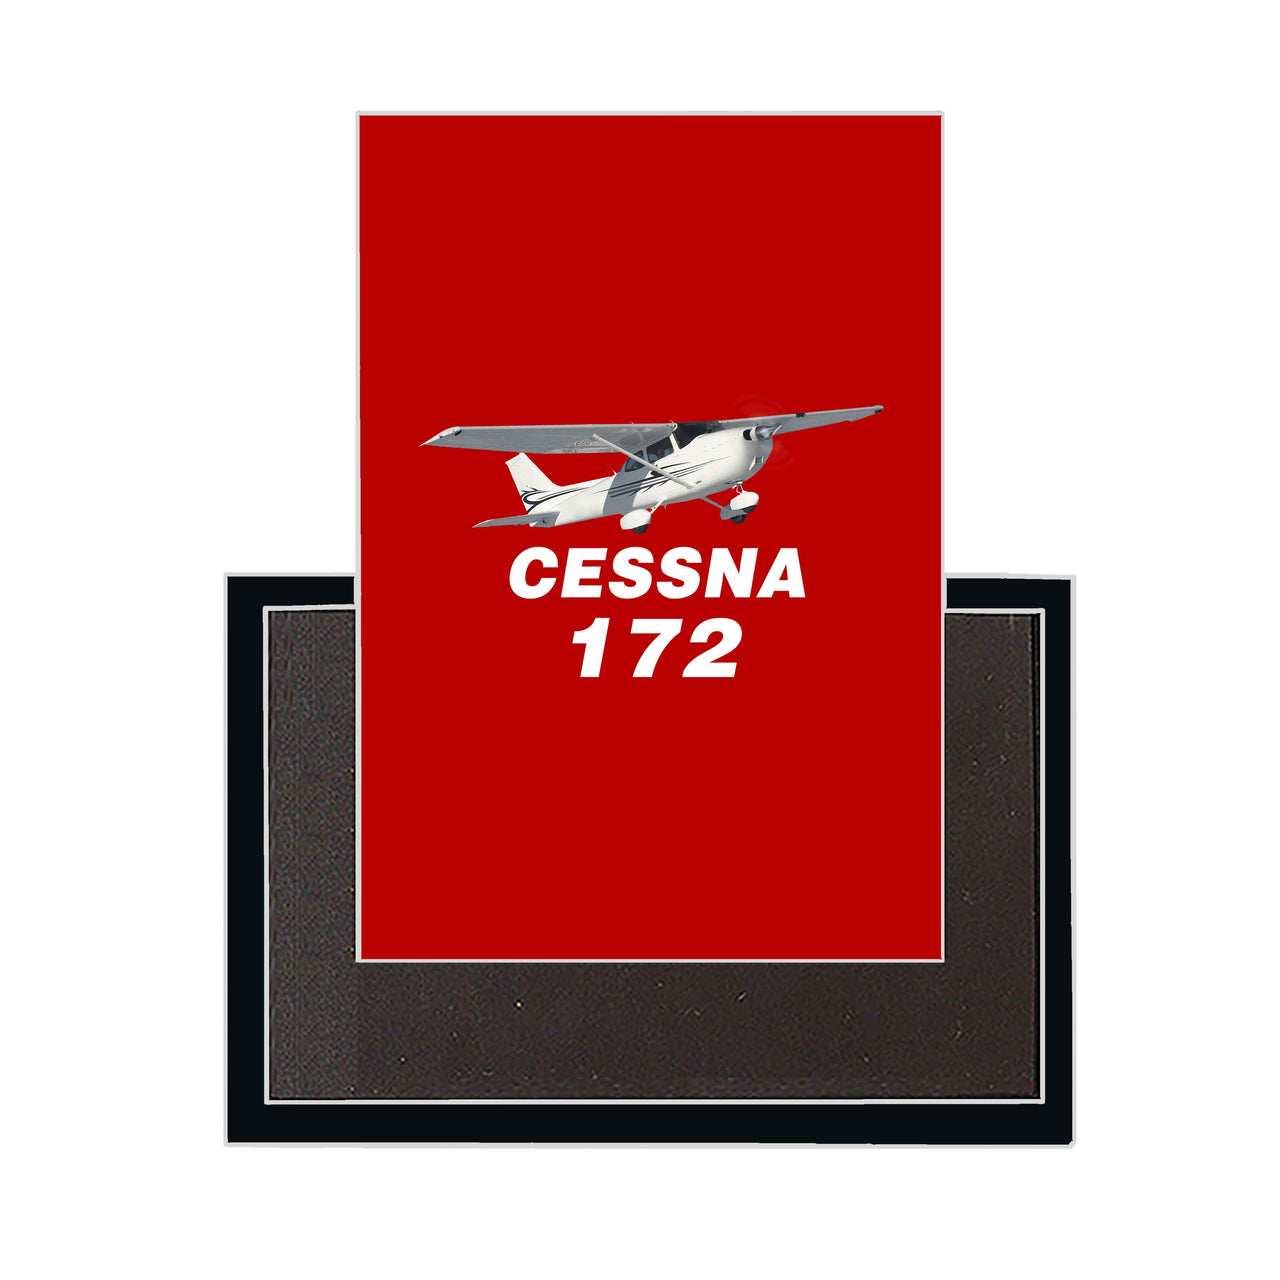 The Cessna 172 Designed Magnets